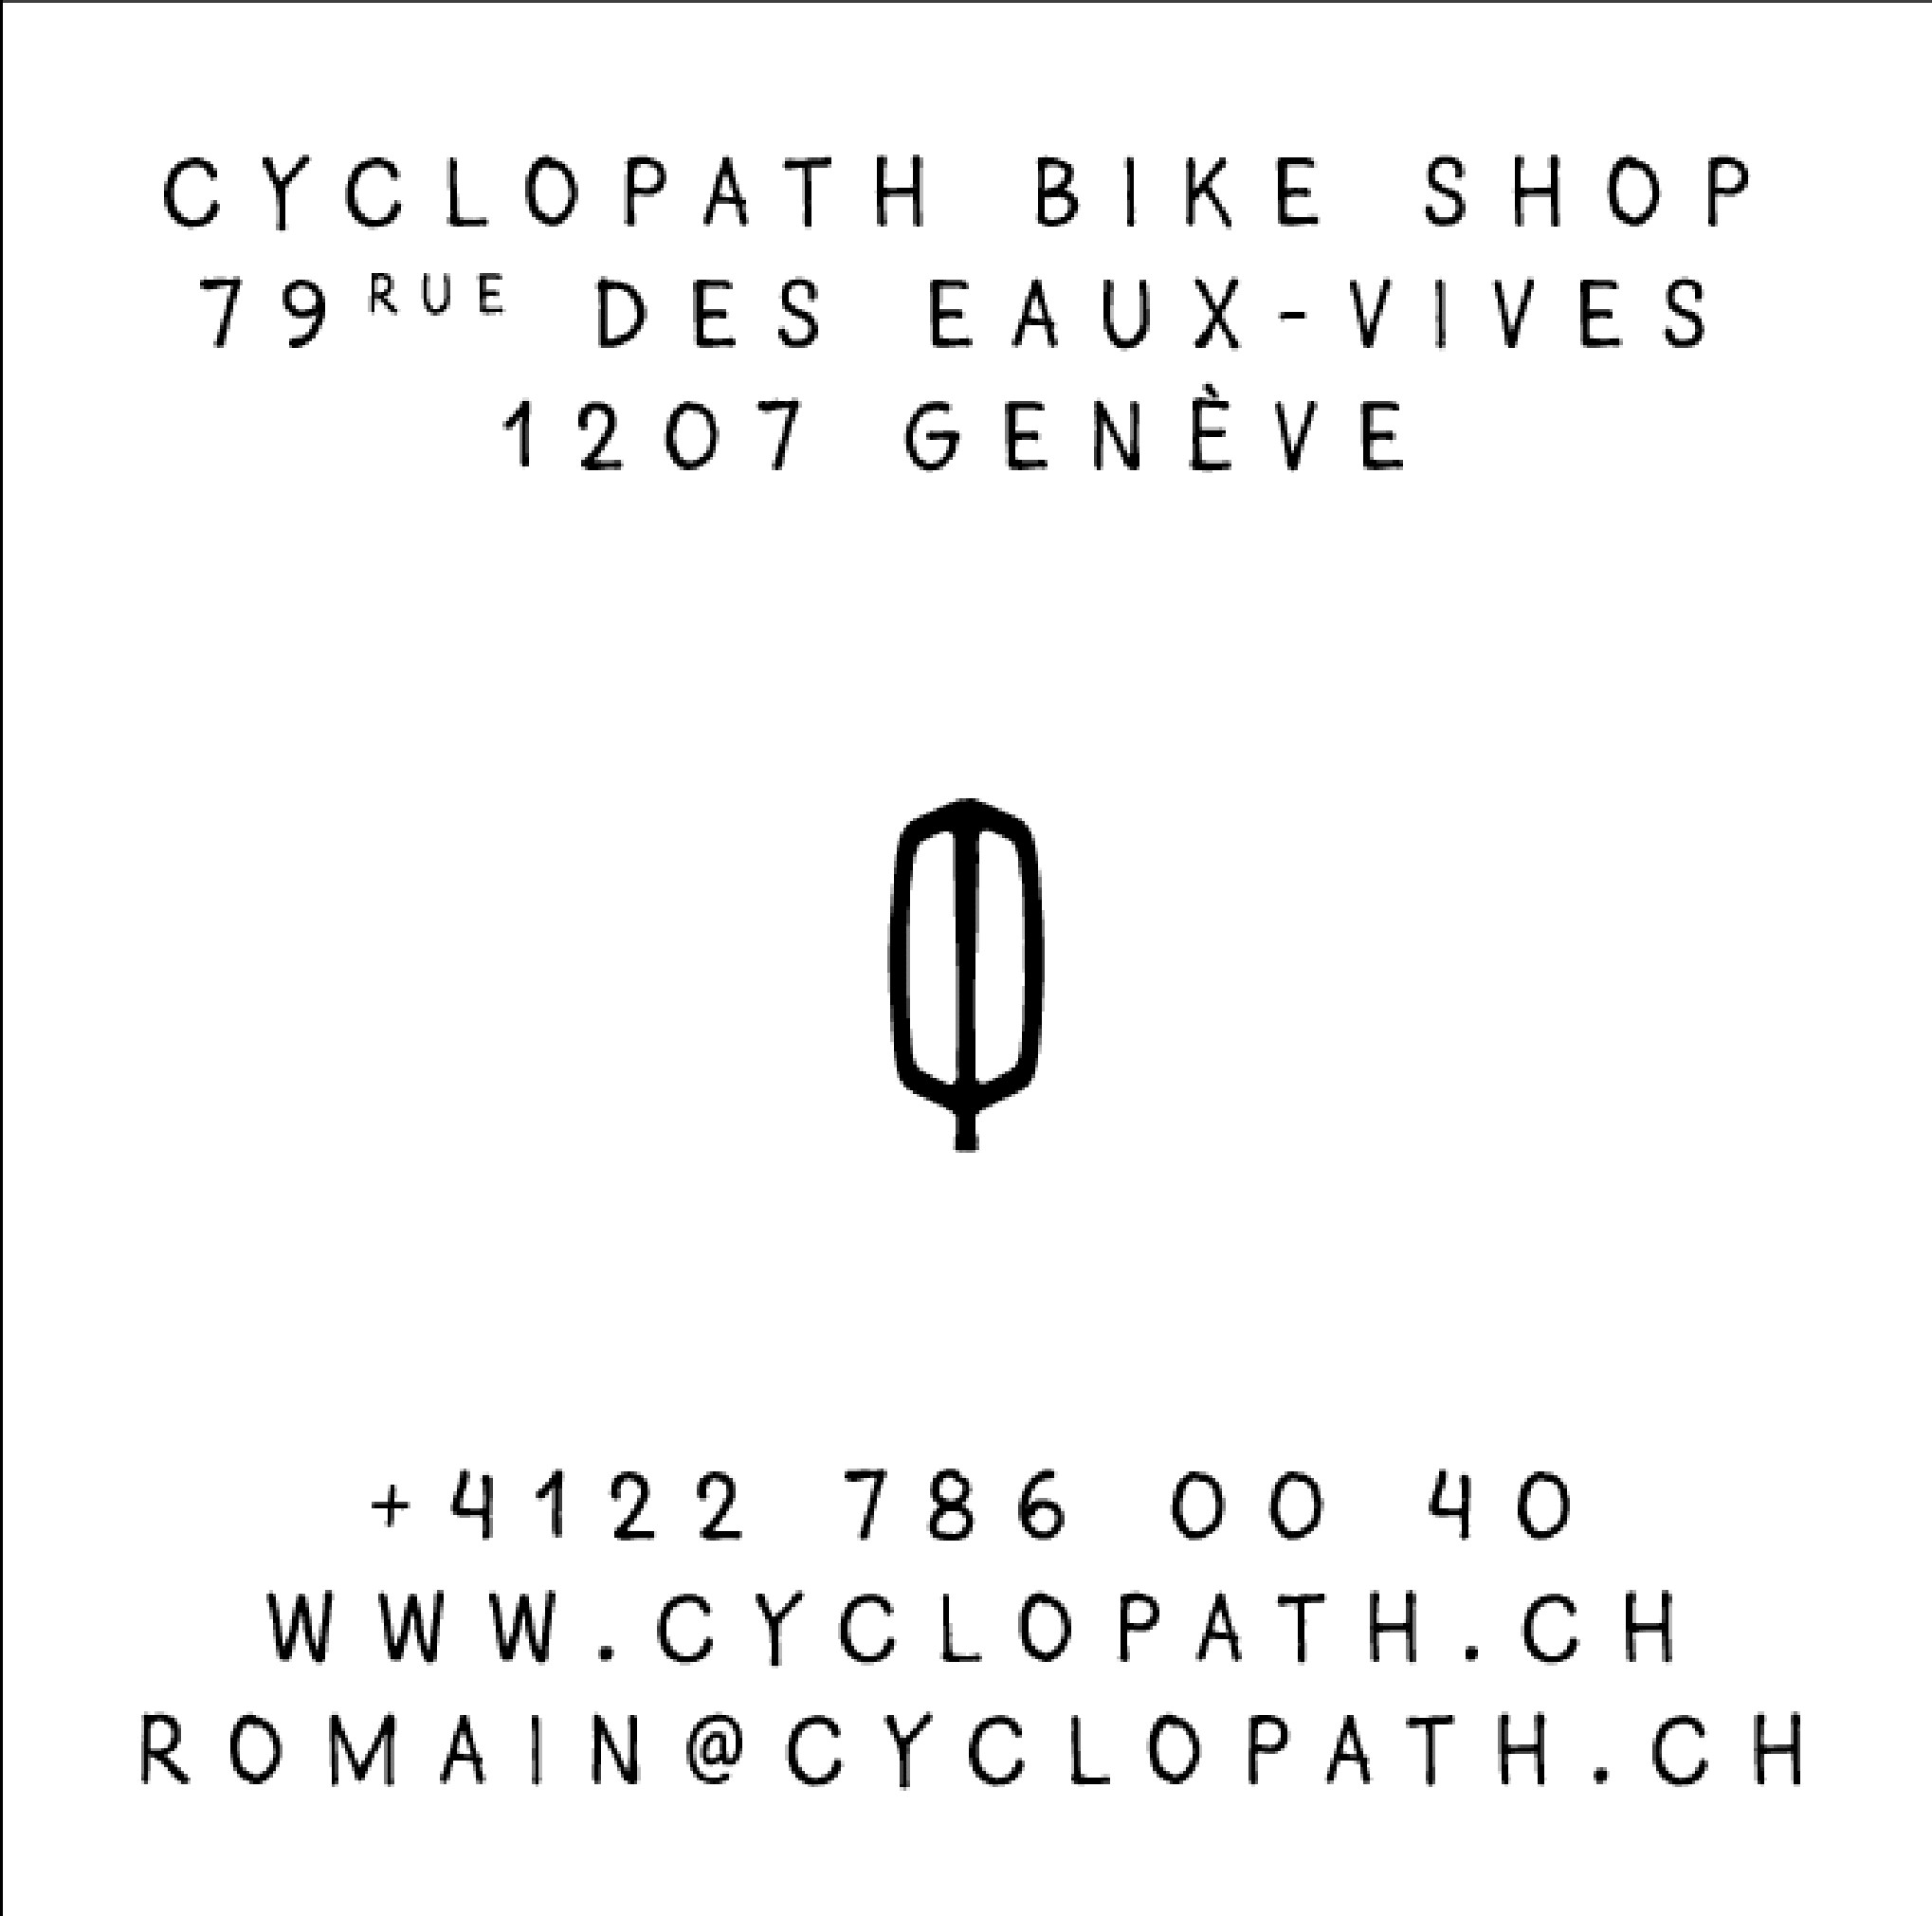 Cyclopath bike shop